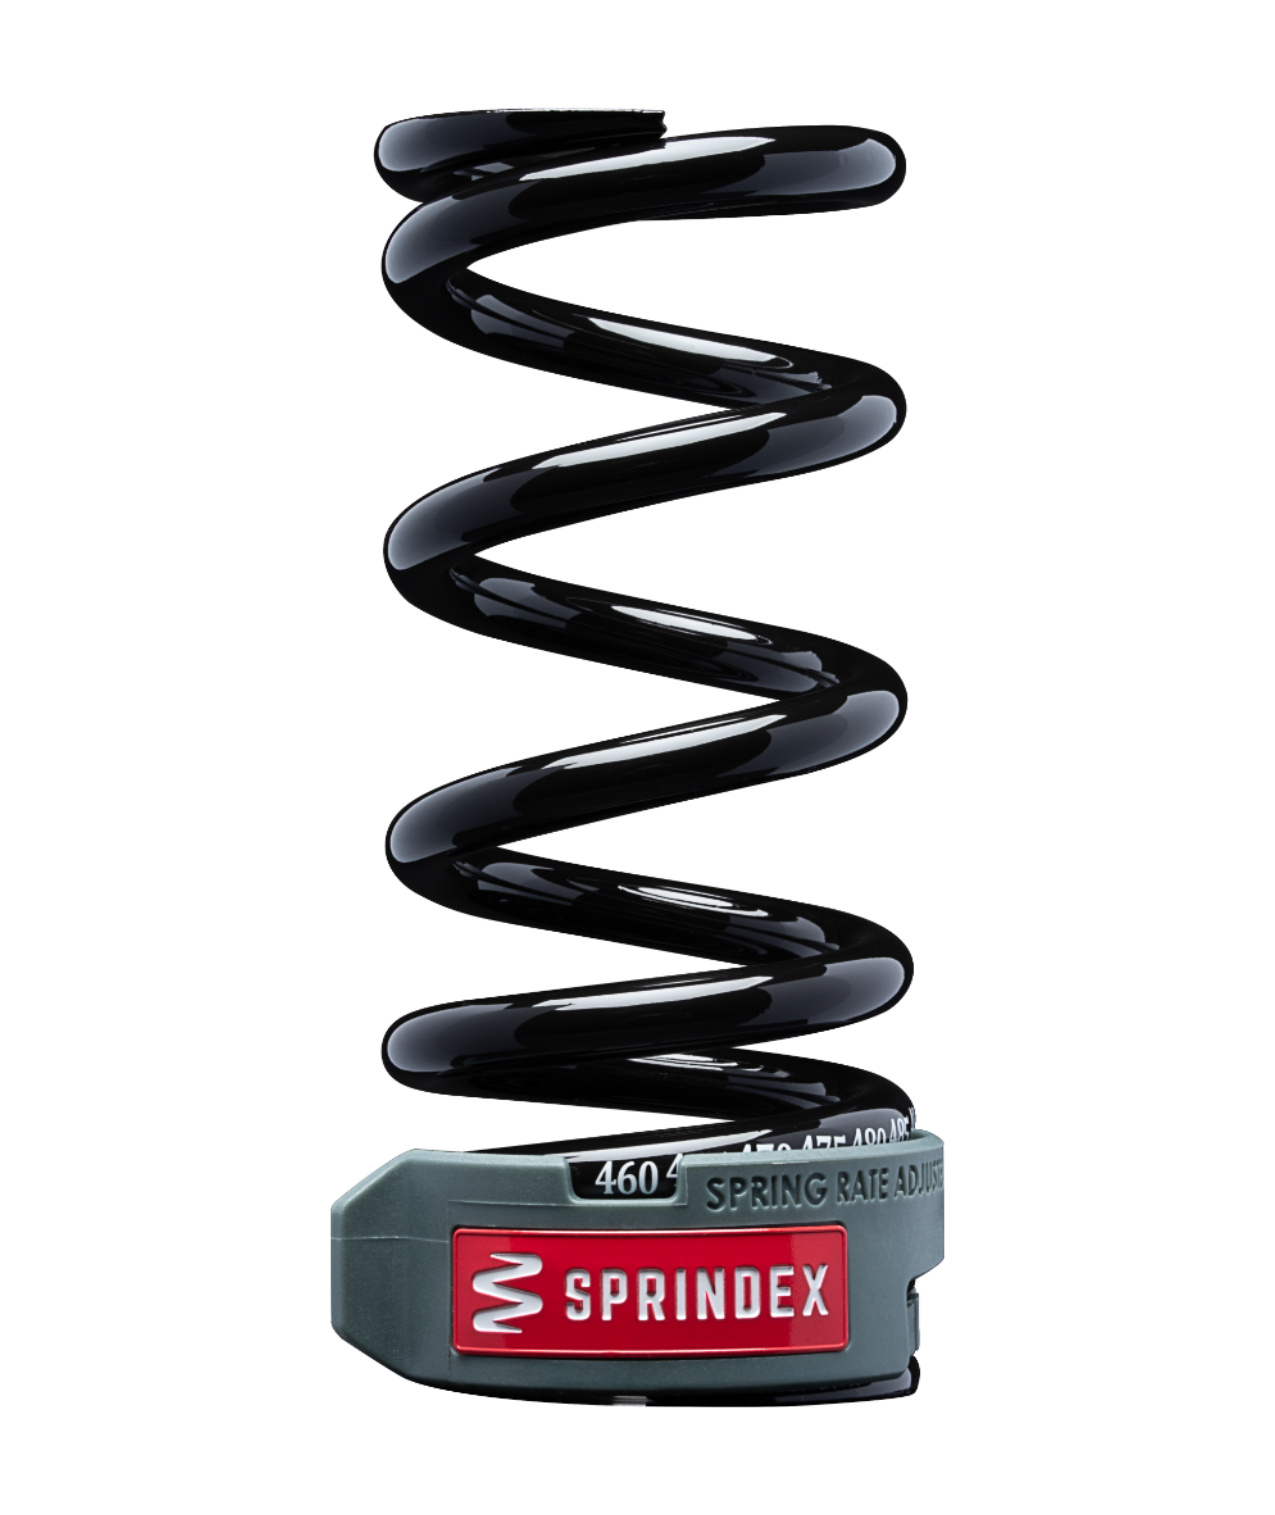 Sprindex Light Trail Spring 55x126mm